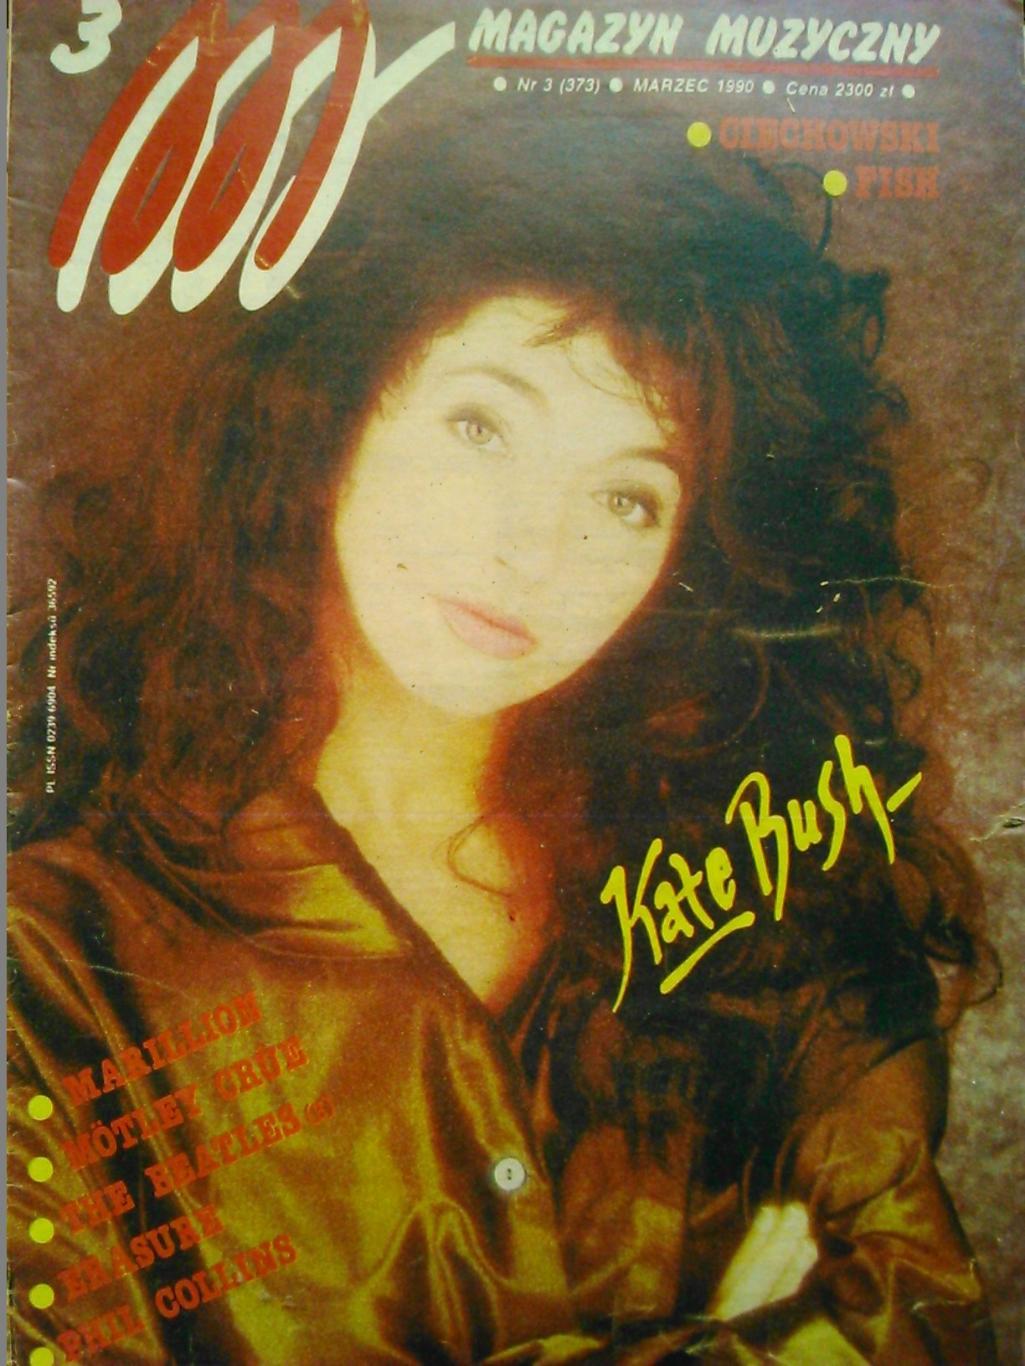 Magazyn muzyczny #3/1990/(Польща).Кейт Буш. Оптом скидки до 50%!